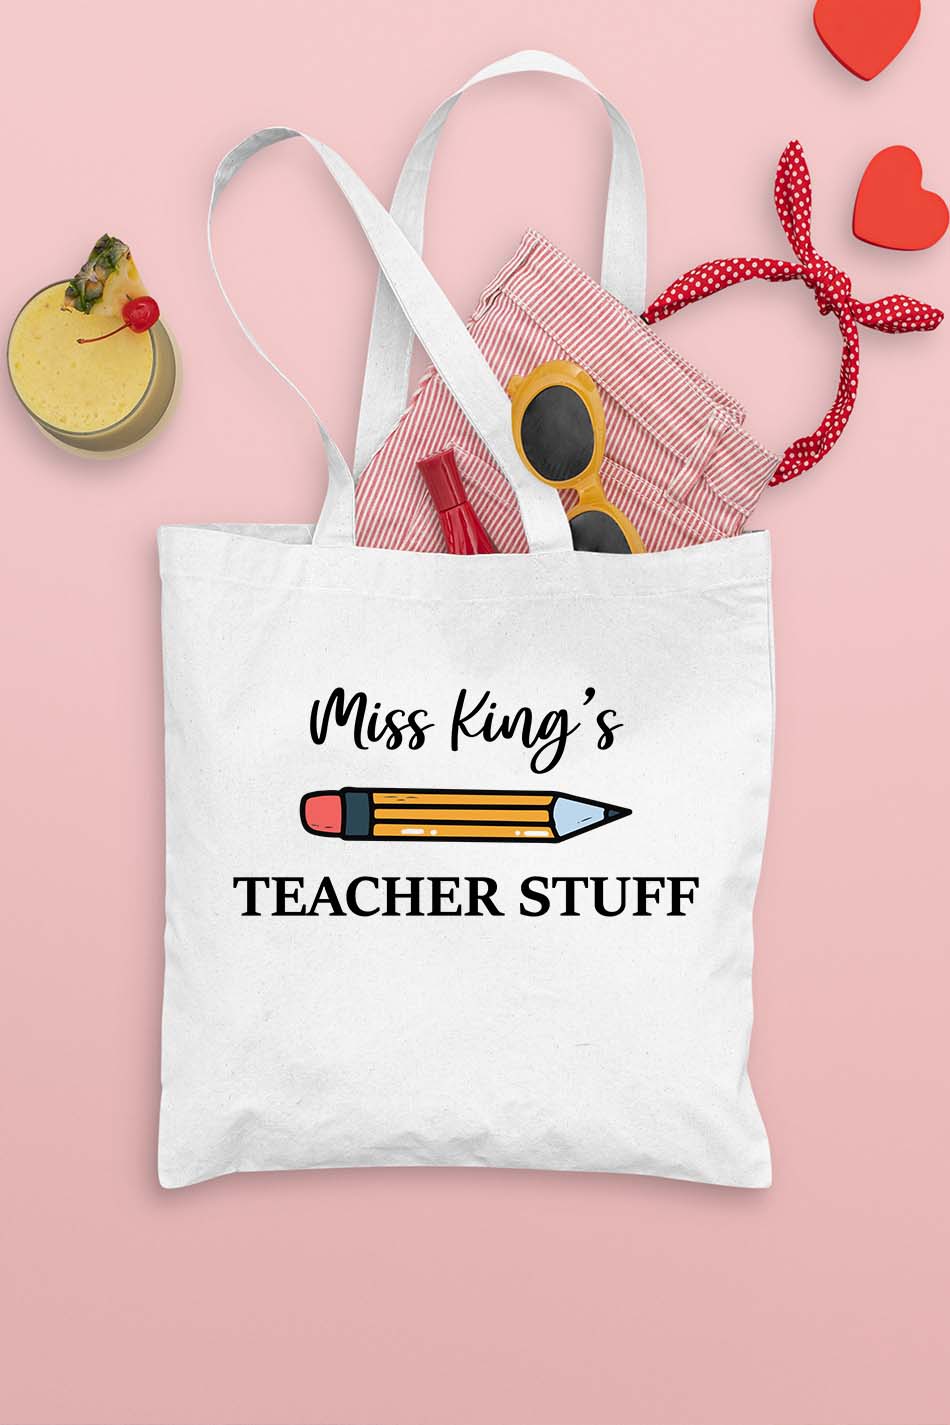 Personalized Teacher Stuff Tote Bag